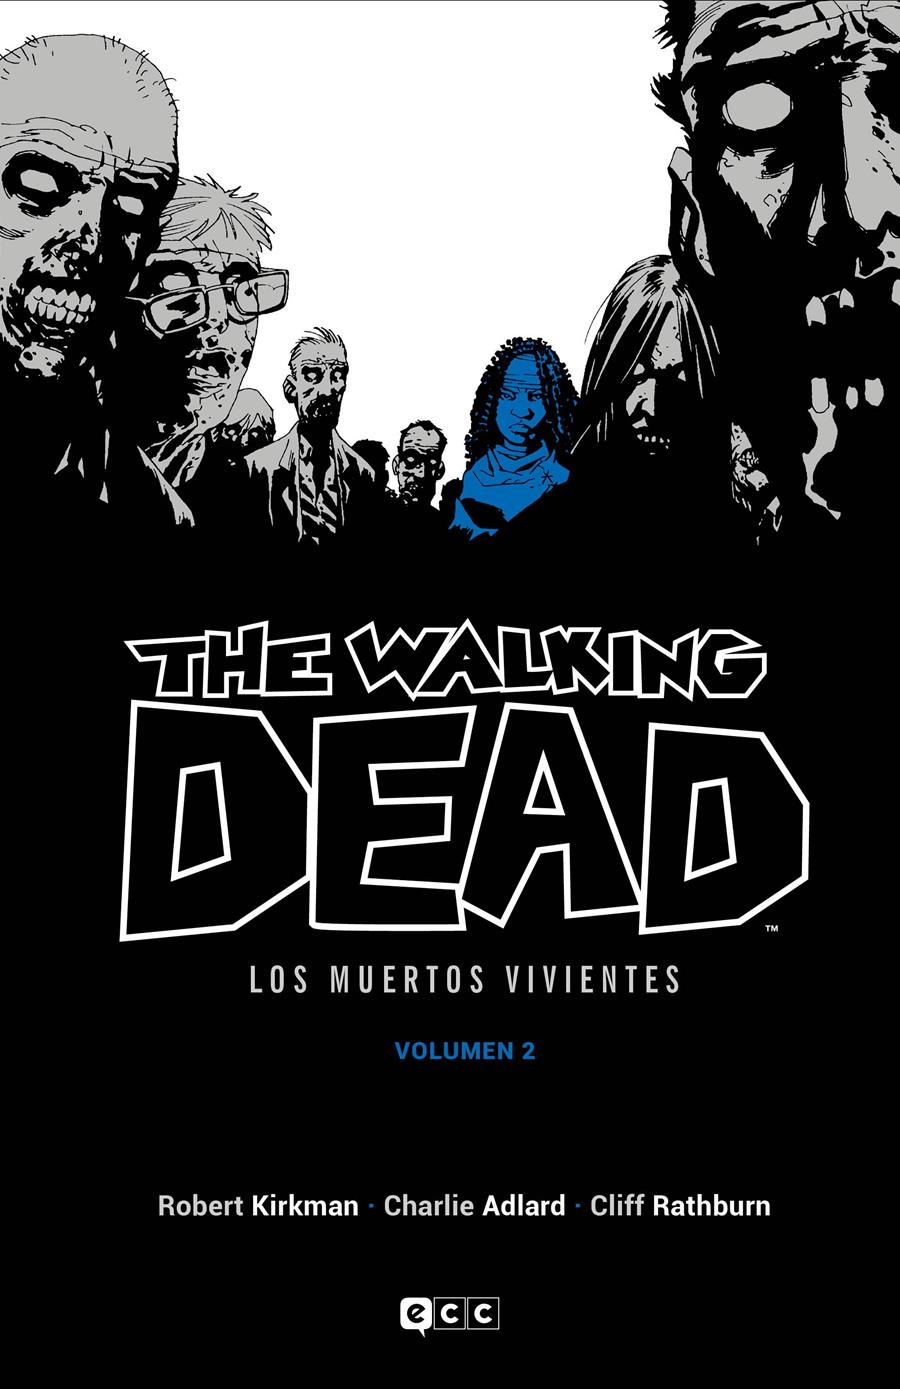 The Walking Dead (Los muertos vivientes) vol. 02 de 16 | N0321-ECC48 | Charlie Adlard / Robert Kirkman | Terra de Còmic - Tu tienda de cómics online especializada en cómics, manga y merchandising